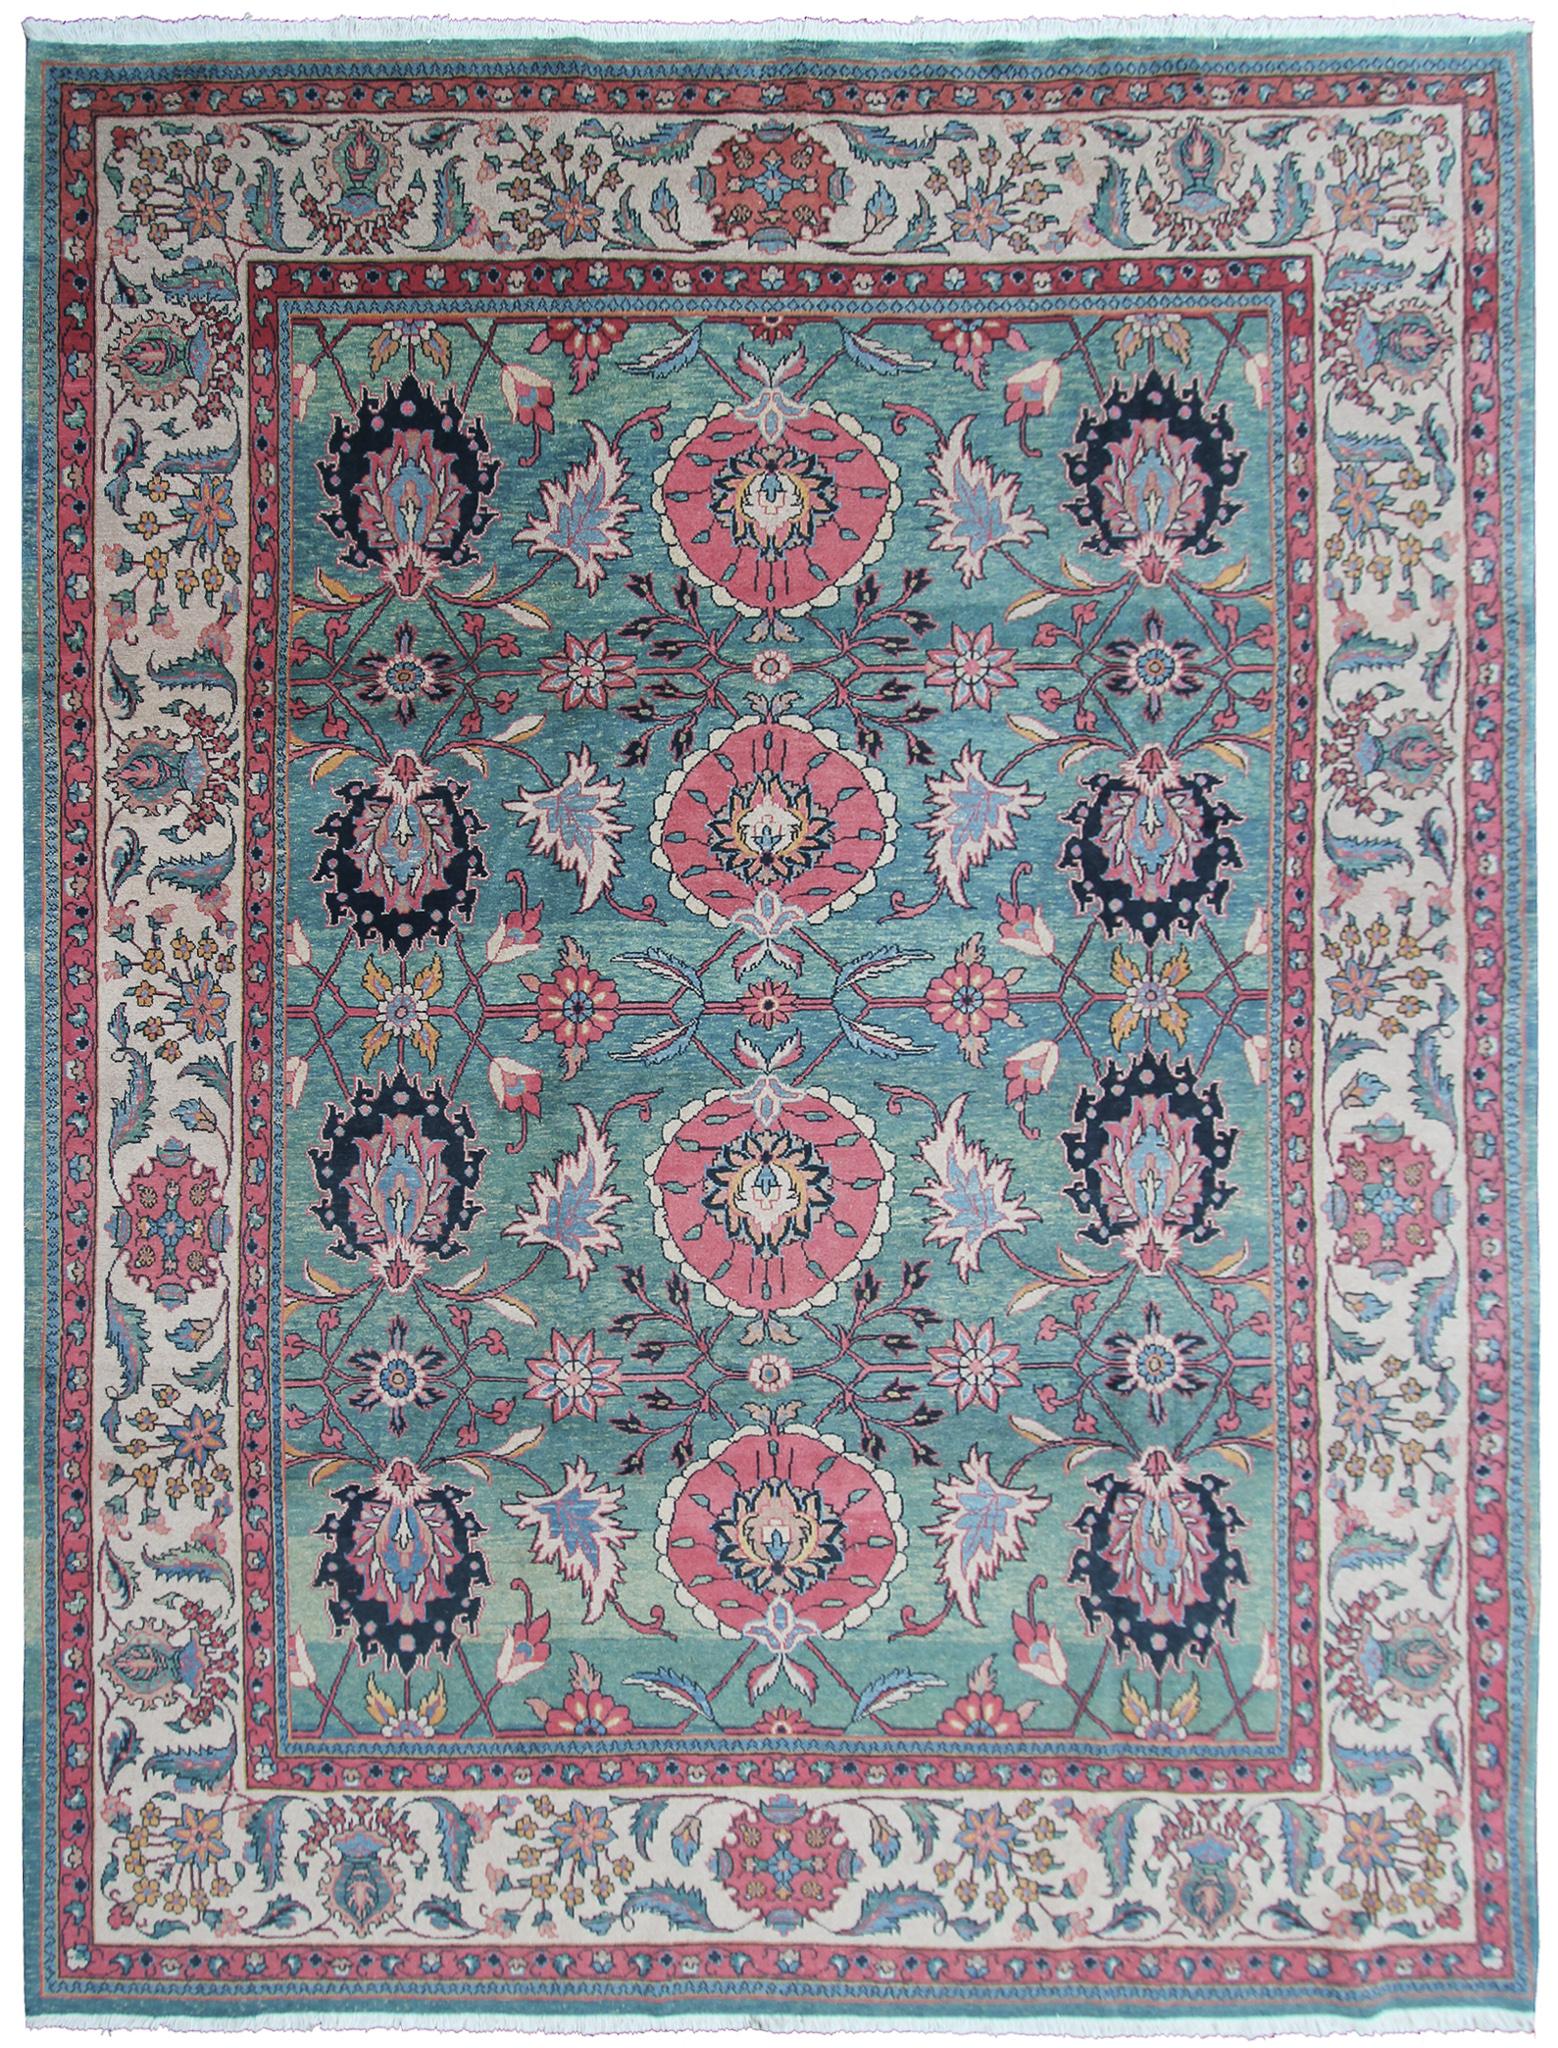 Incredible vintage mahal rug sultanabad rug area rug

9'8